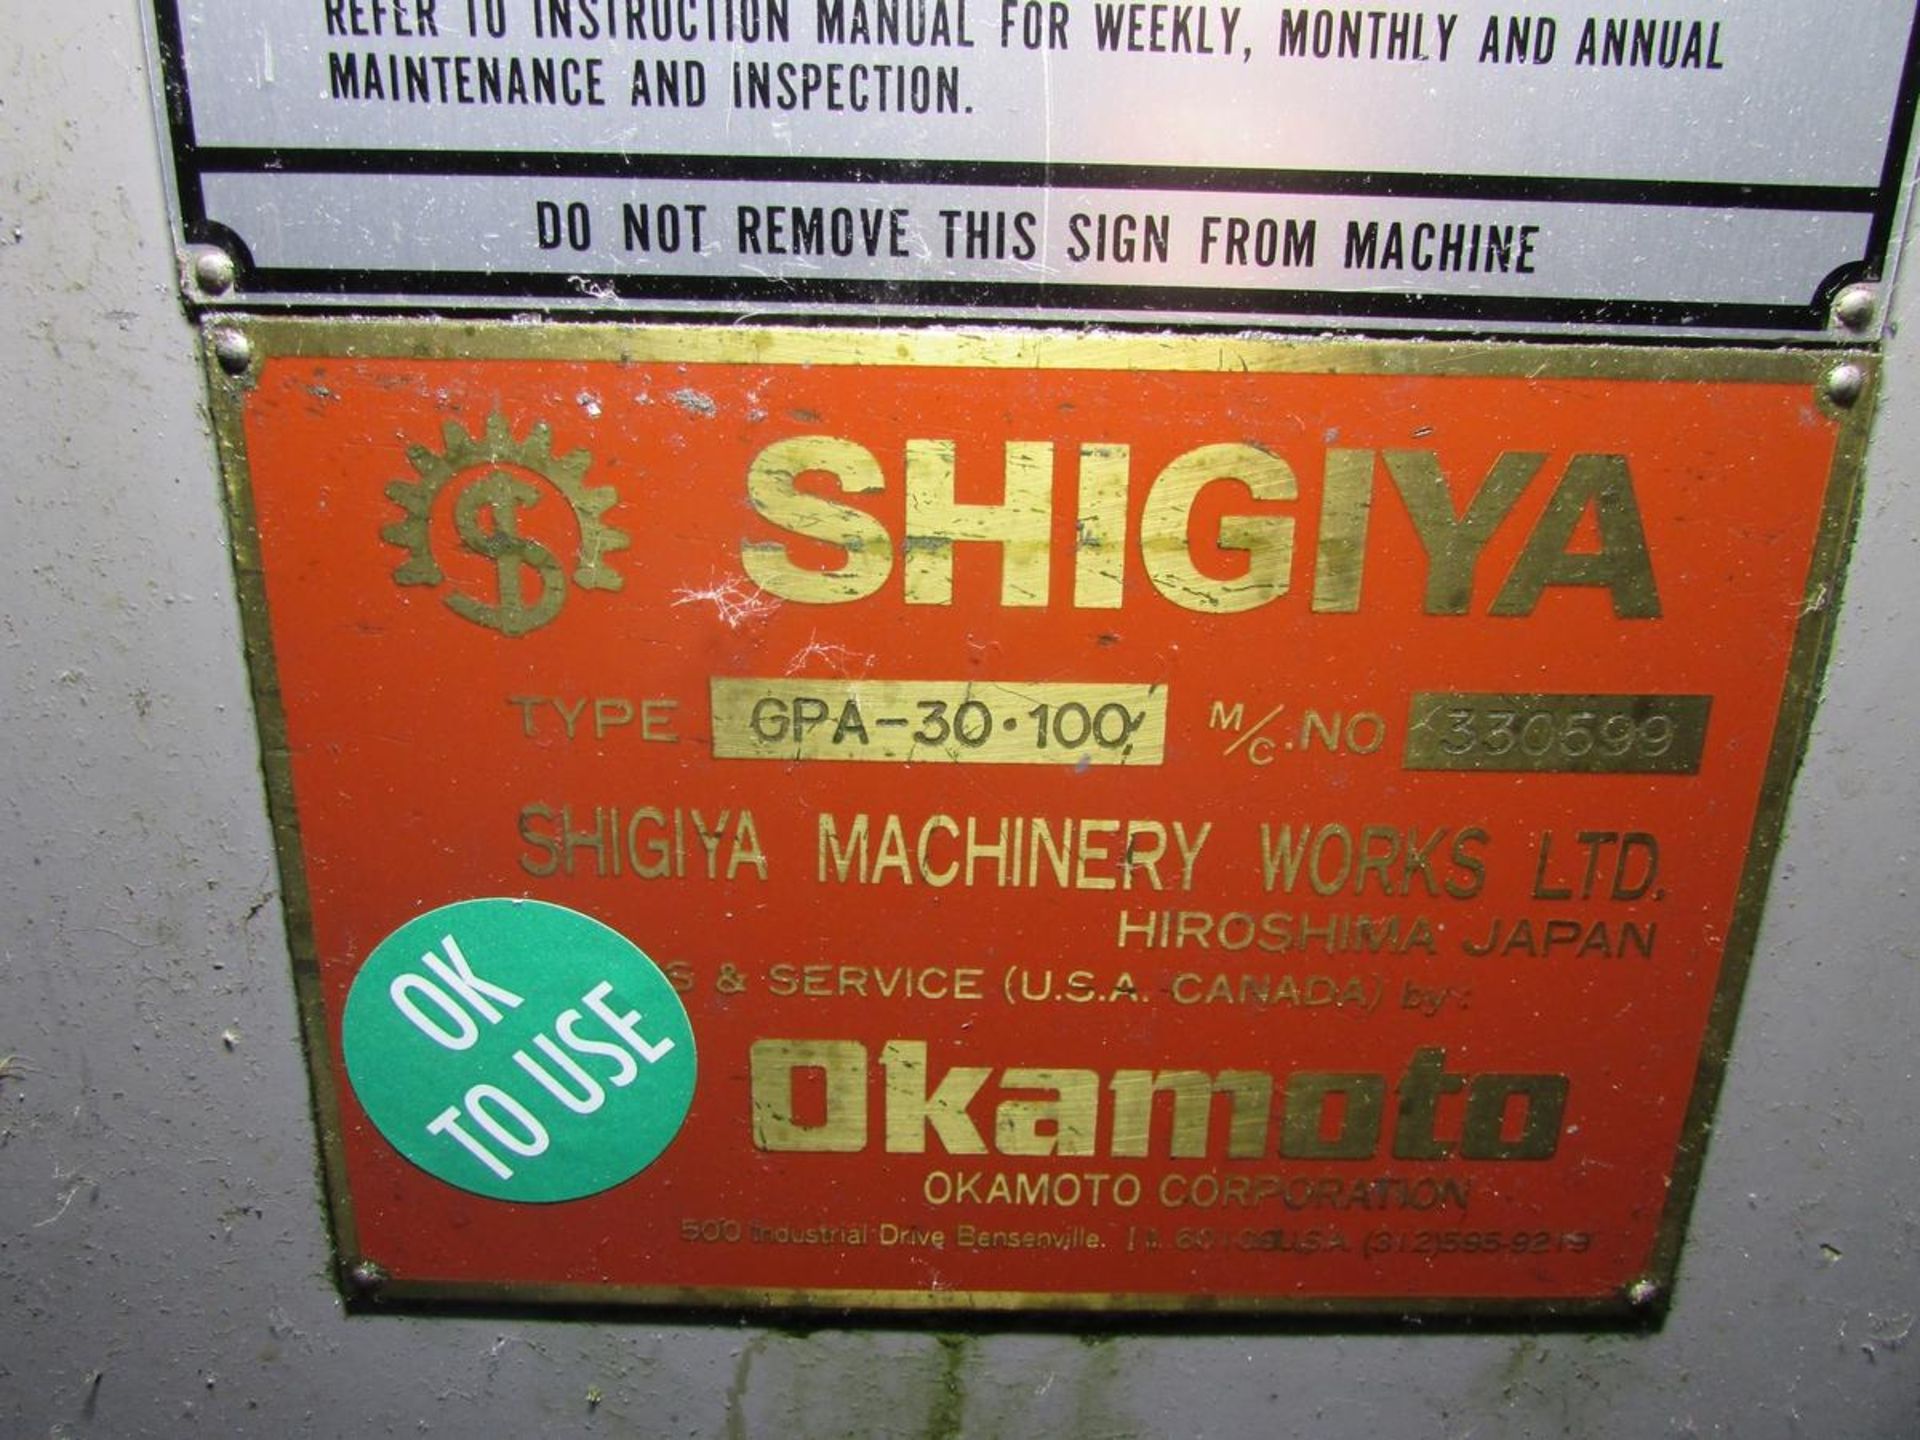 Shigiya GPA-30-100 Cylindrical Grinder - Image 19 of 21